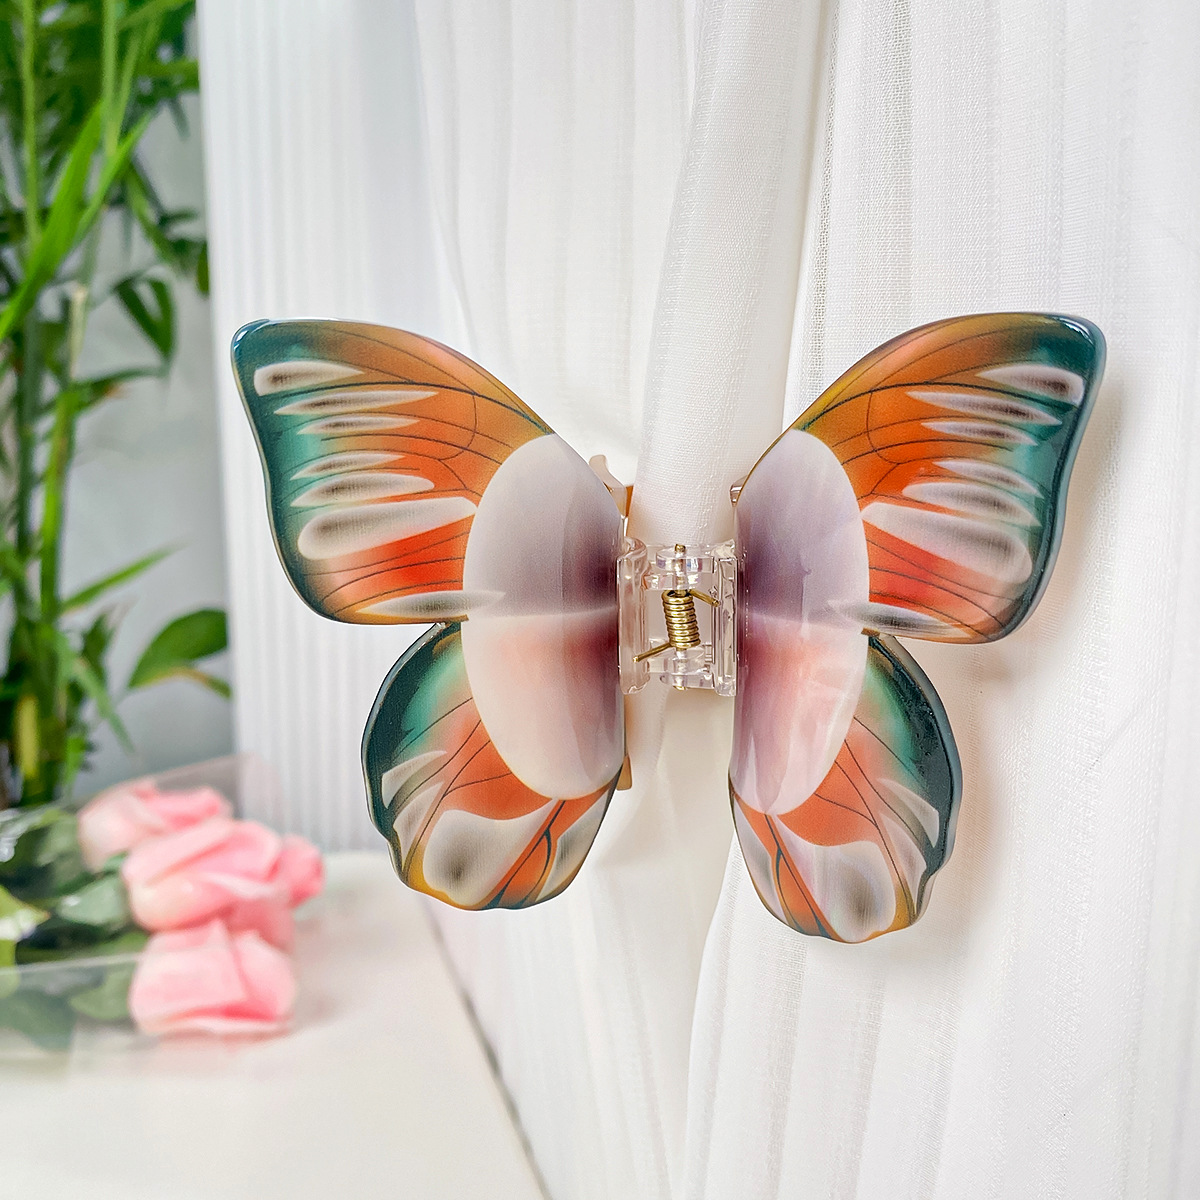 3:Orange band sleeve butterfly